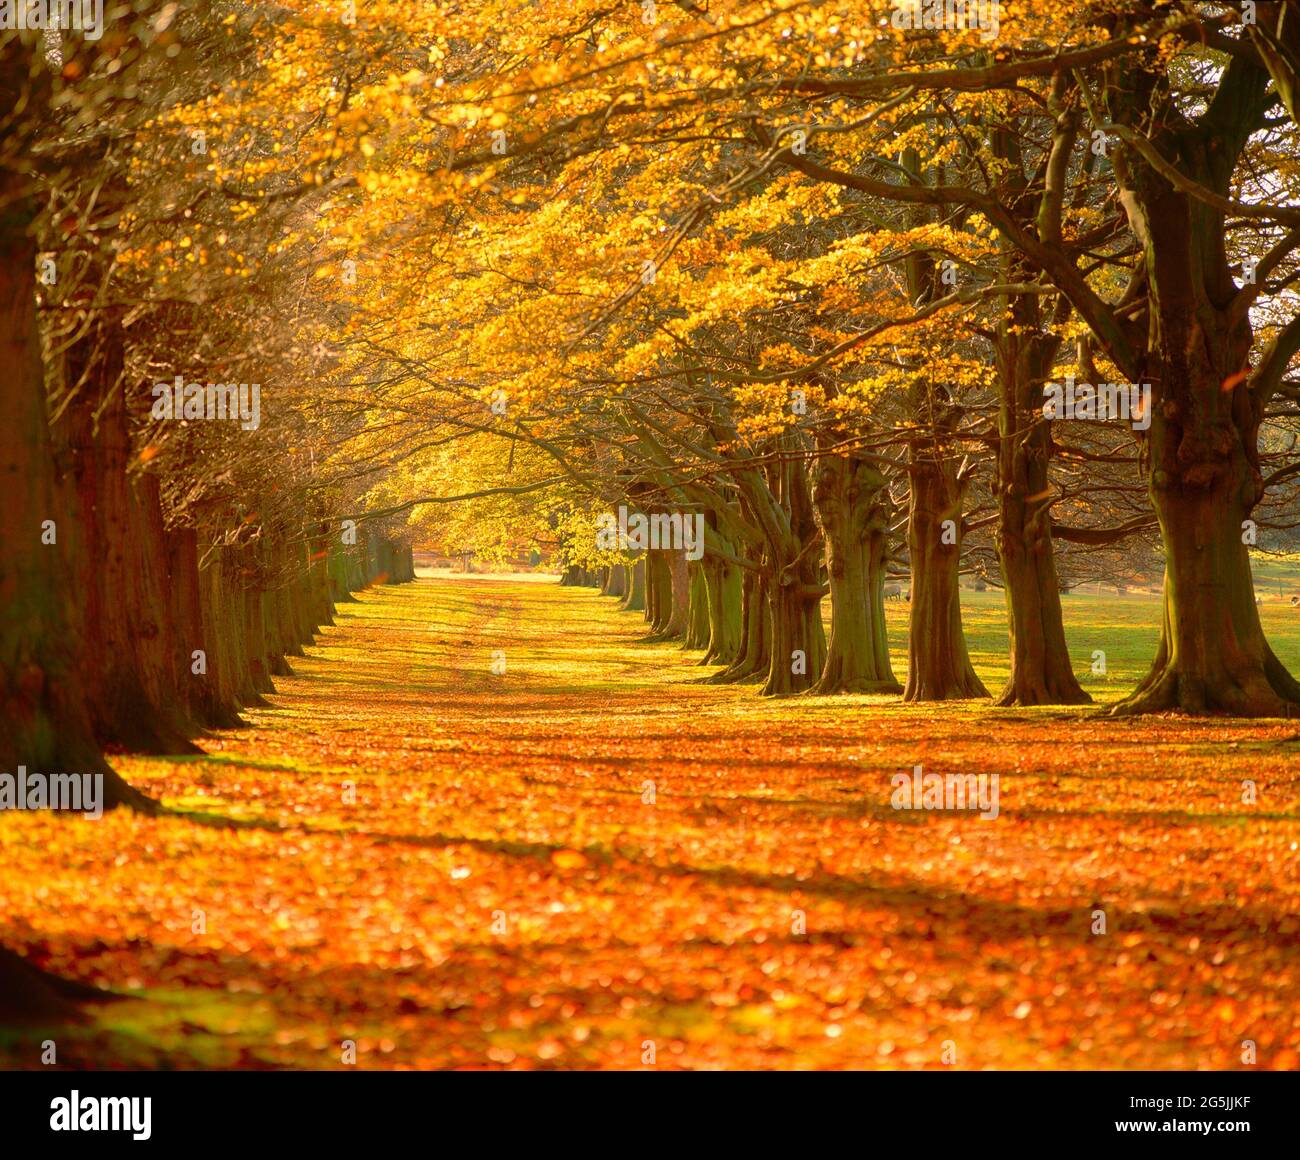 avenida de haya, otoño, Foto de stock